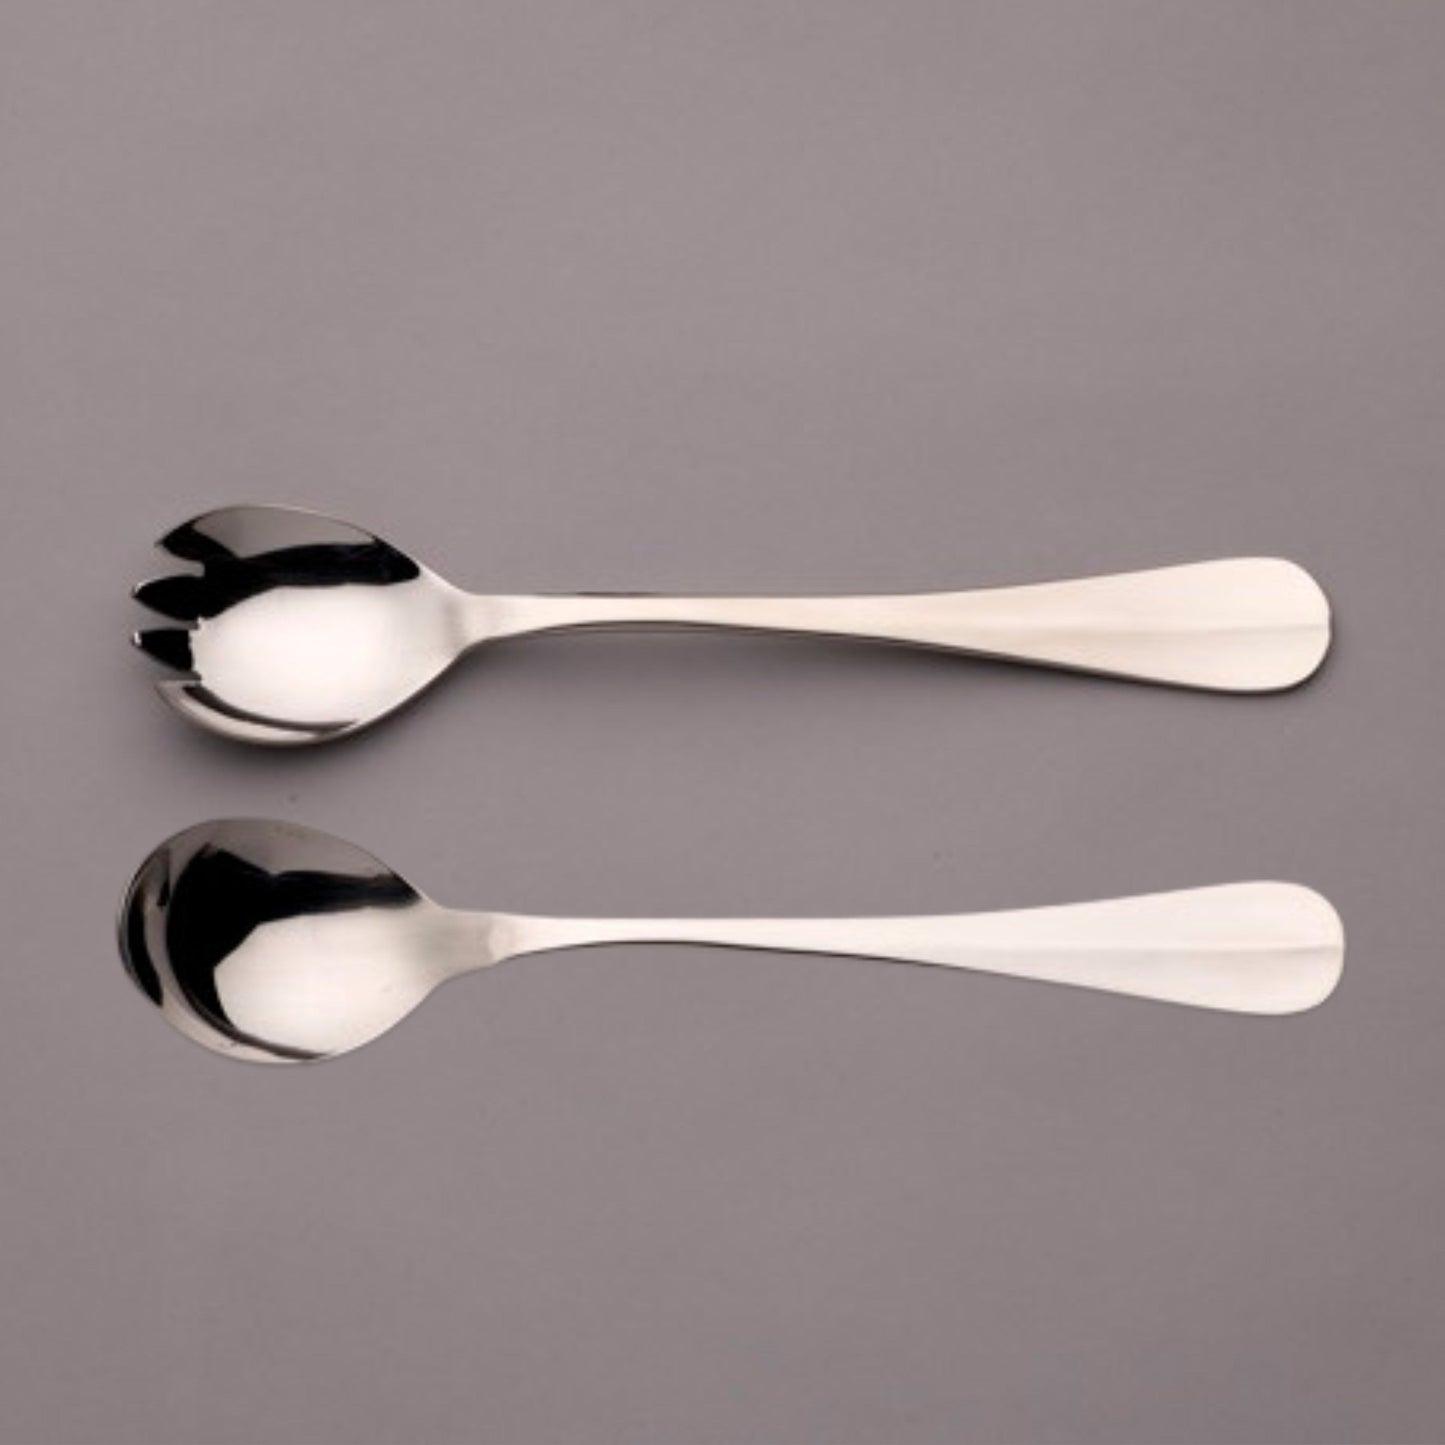 Dubarry silver plated flatware cutlery